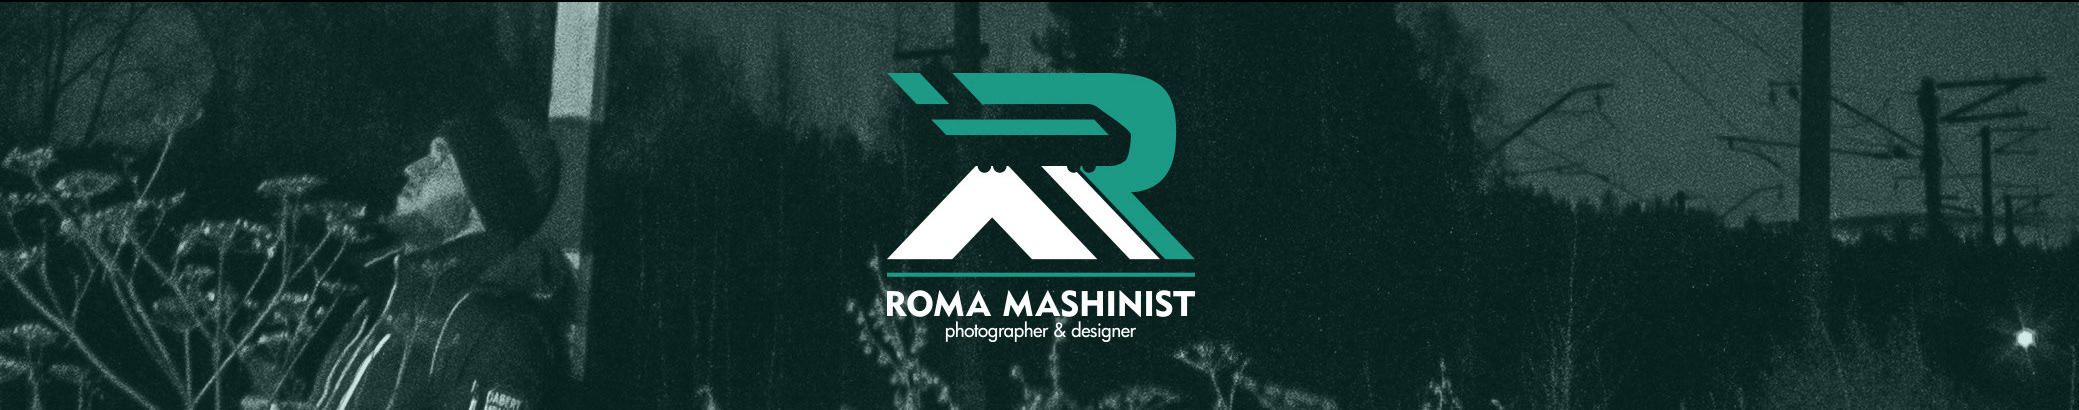 Roma Mashinist's profile banner